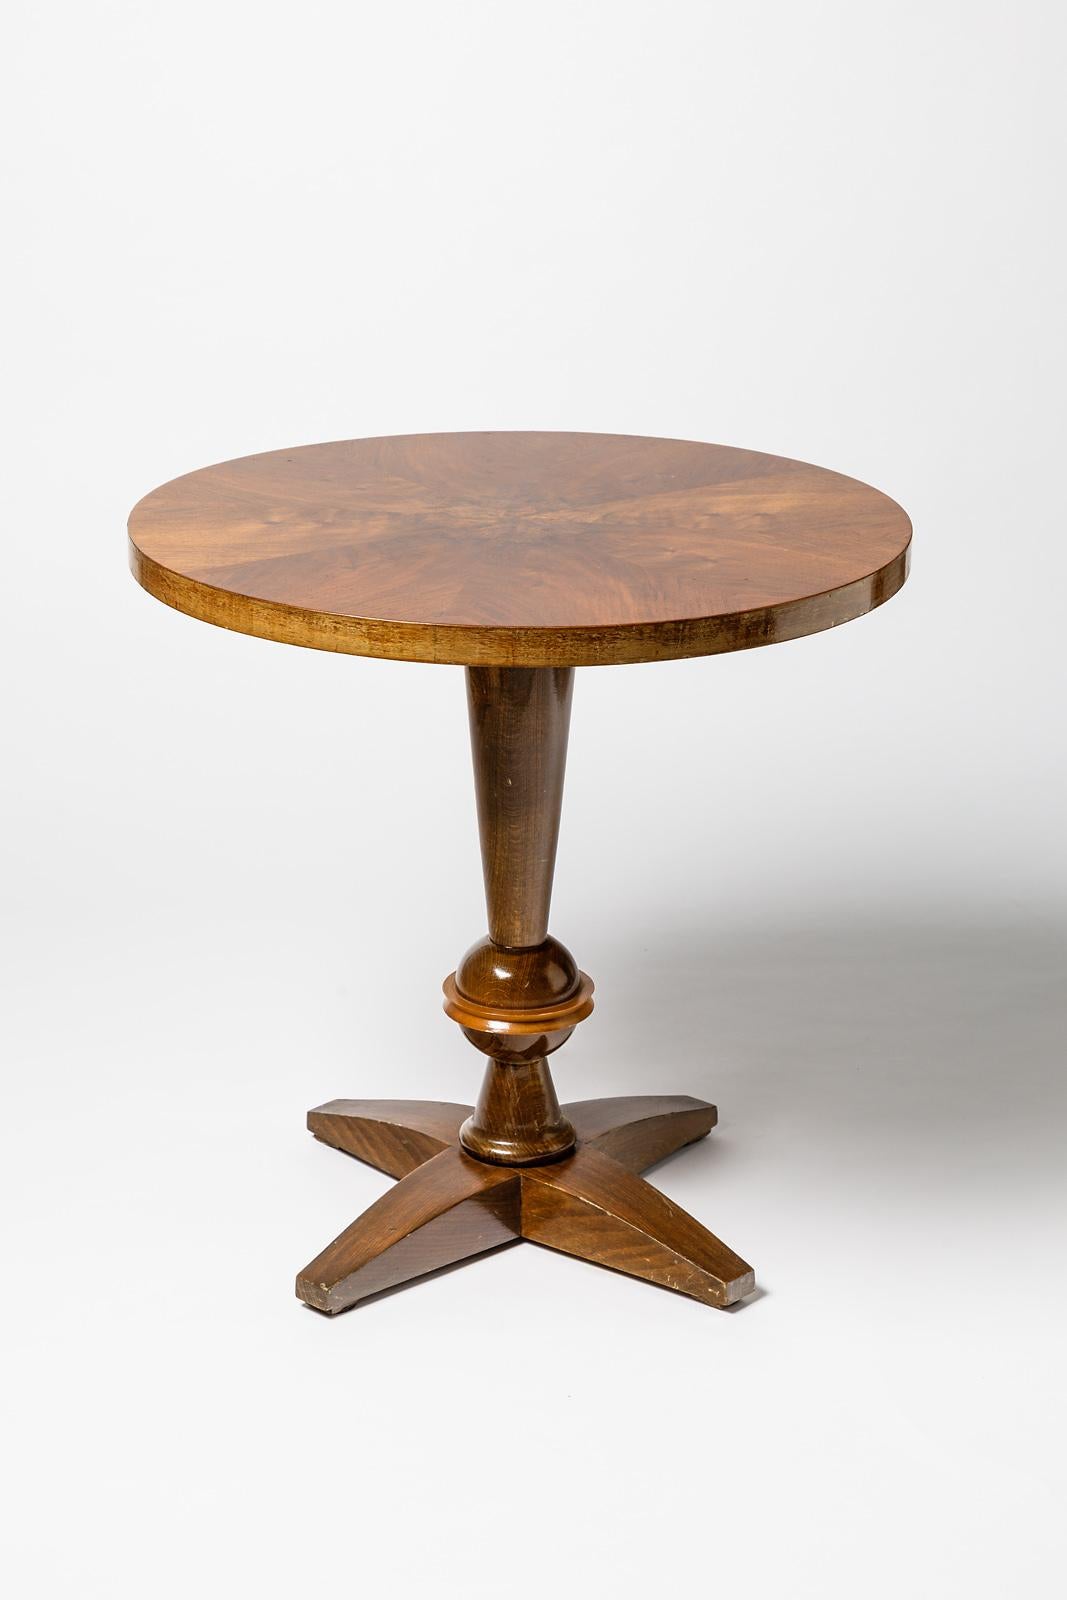 20th Century French Brown Wood Art Deco Guéridon Table circa 1930 Coffee or Sofa Table